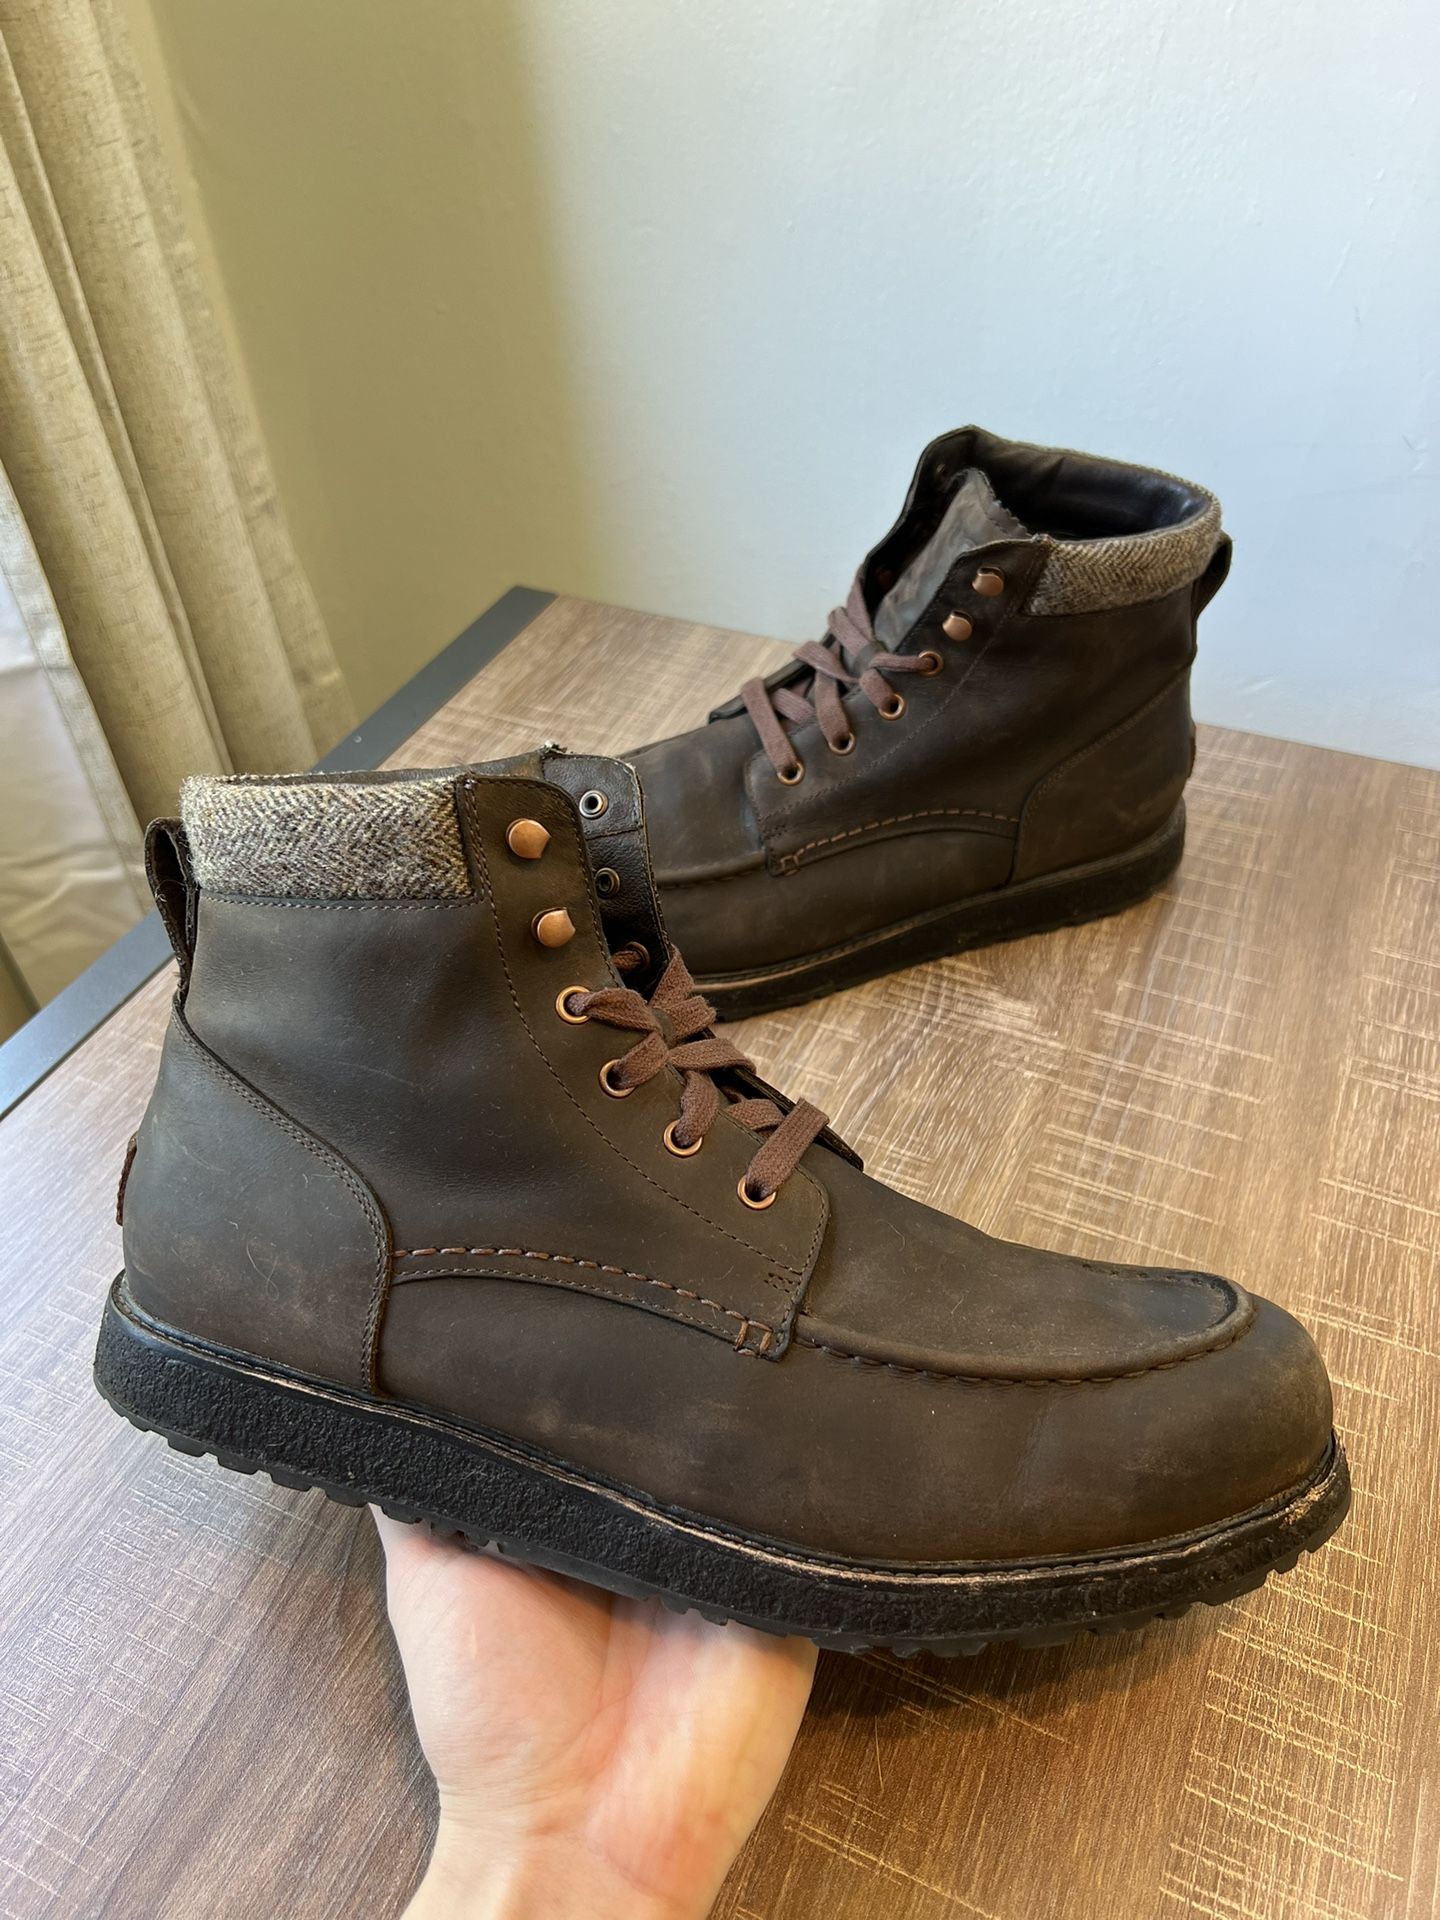 UGG Australia Merrick Boots Men’s 13 Brown Leather Moc Toe Wool Lace Up 1009227